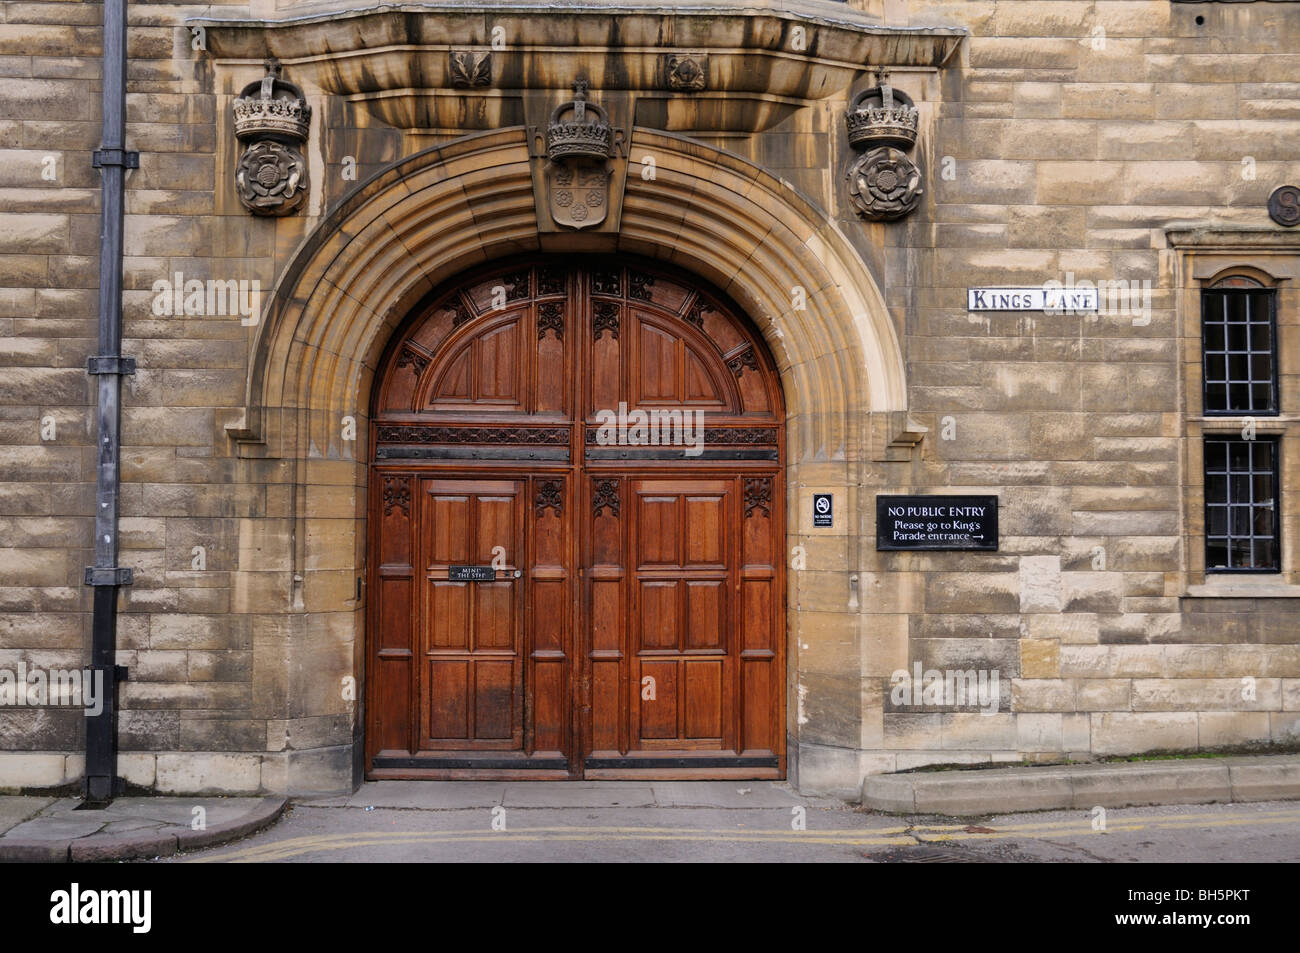 England; Cambridge; The Kings Lane entrance to Kings College Stock Photo